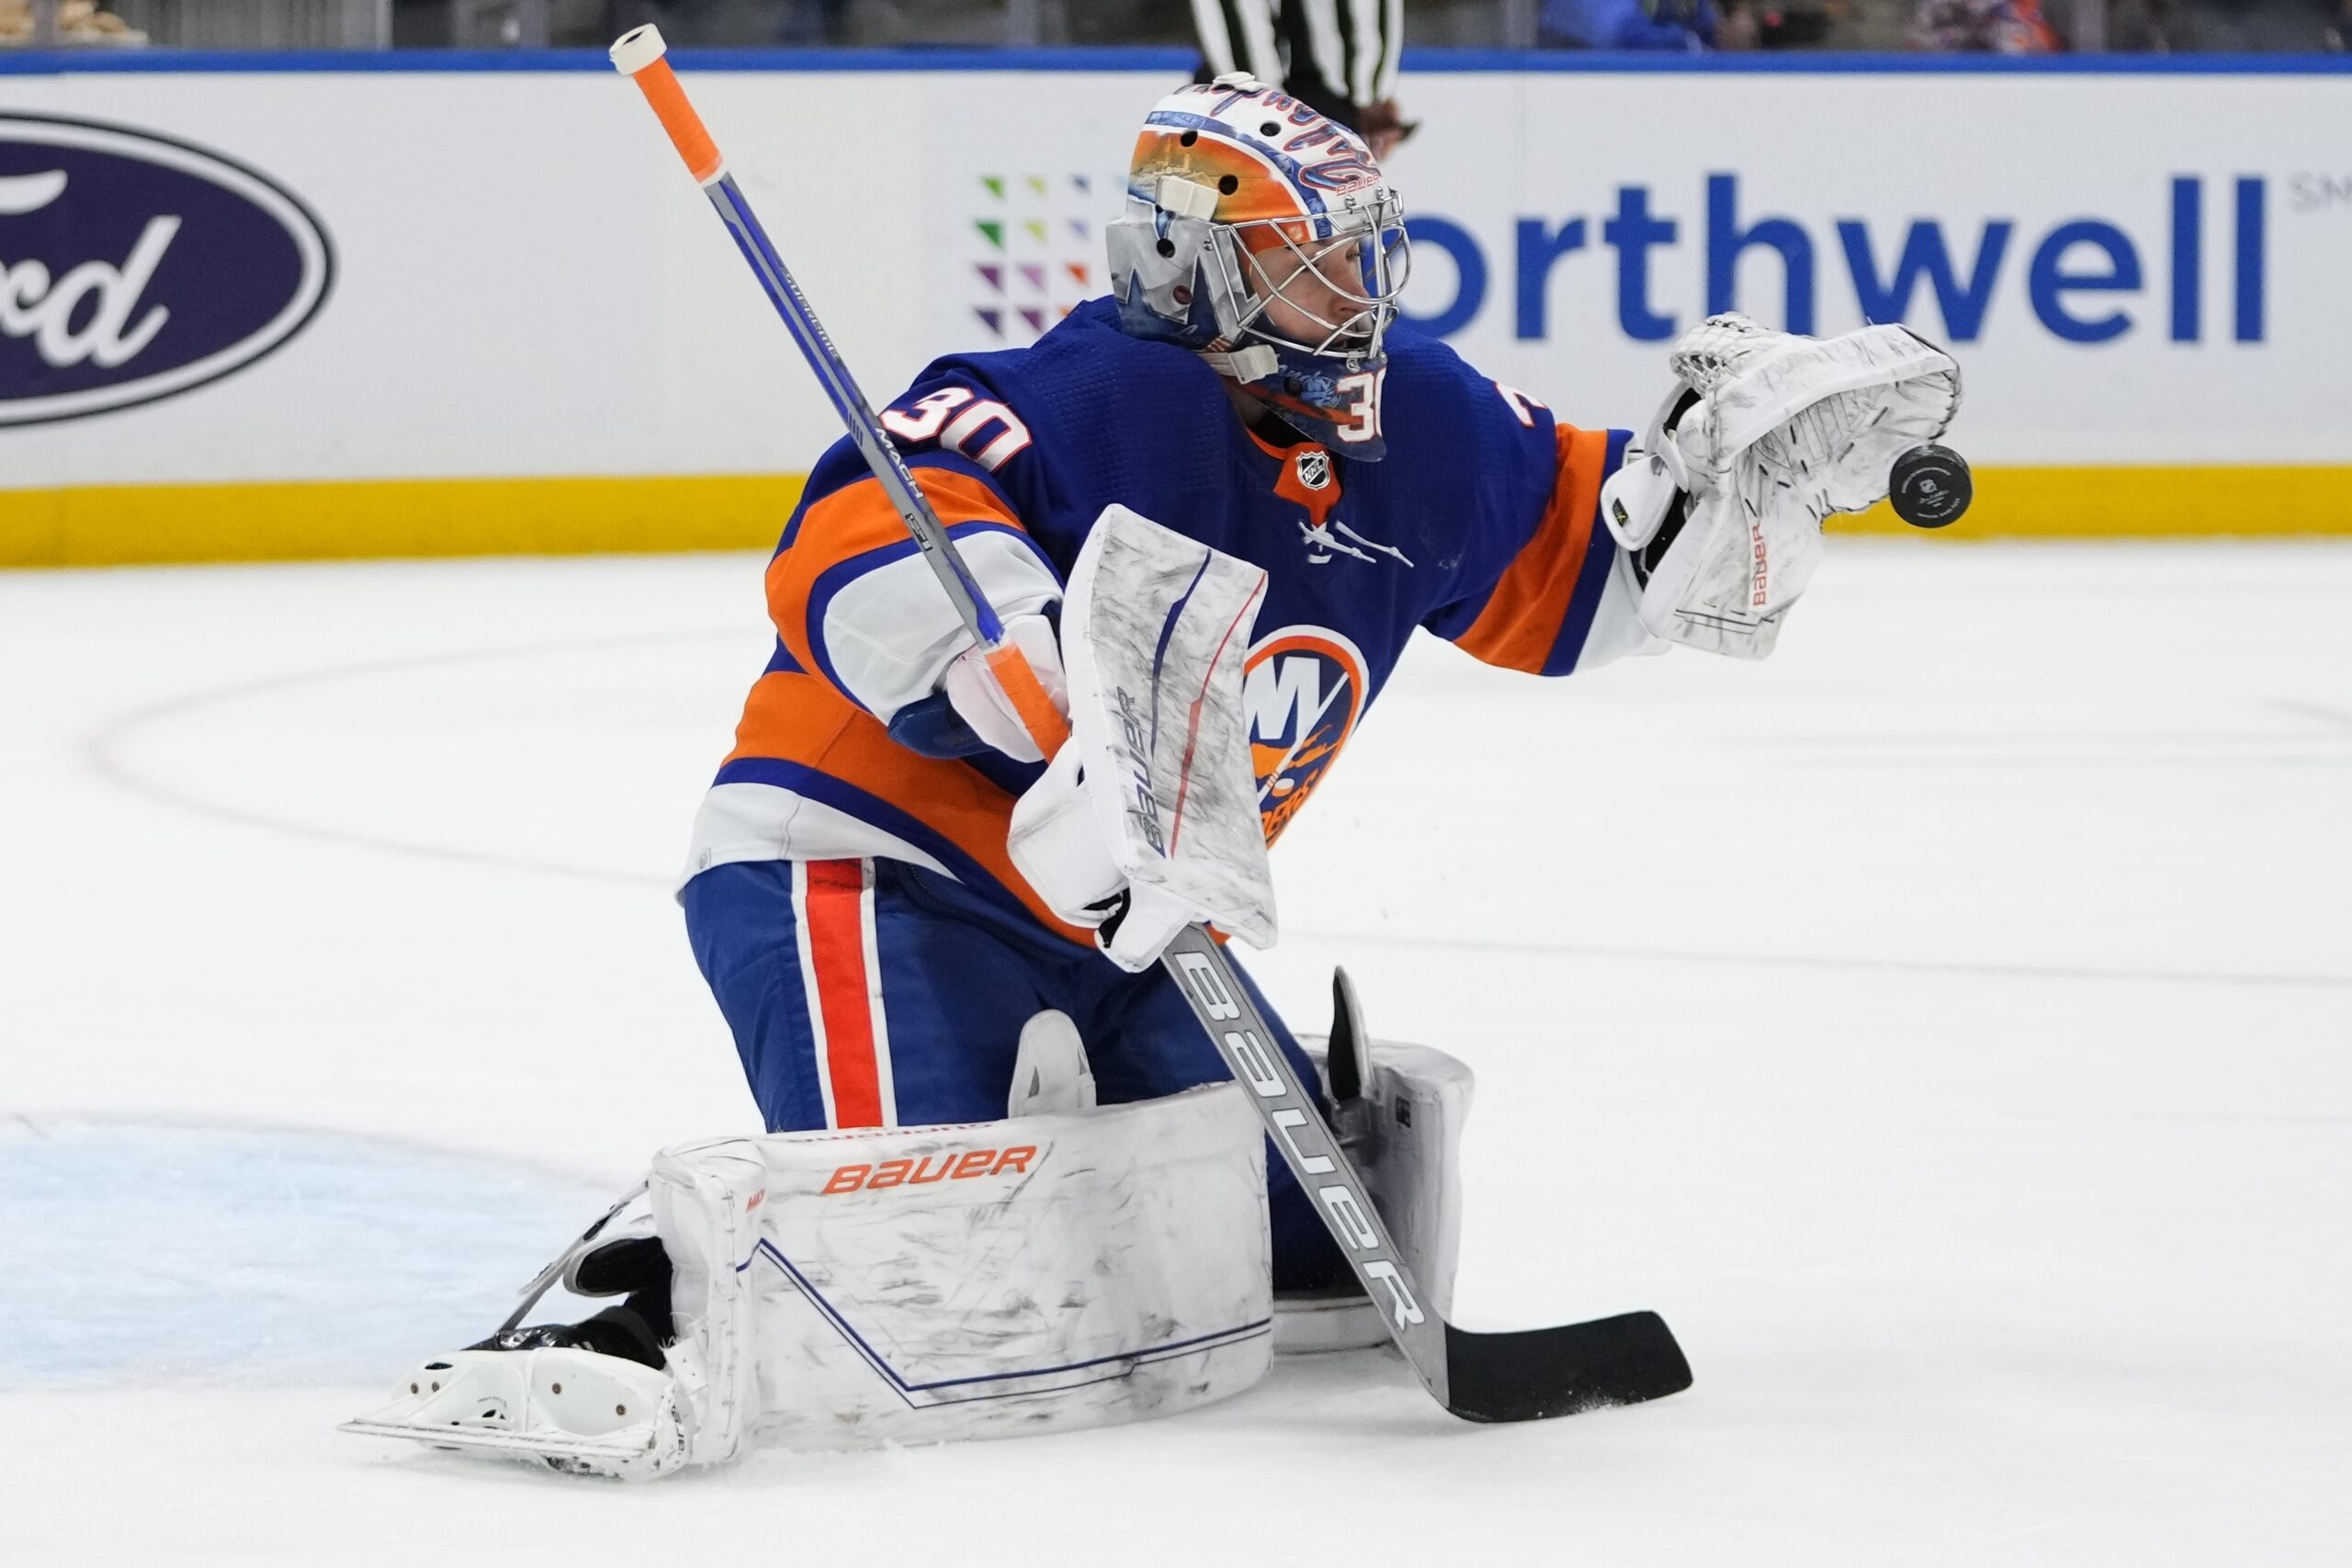 NY Islanders goaltender Ilya Sorokin continues to lead the NHL in